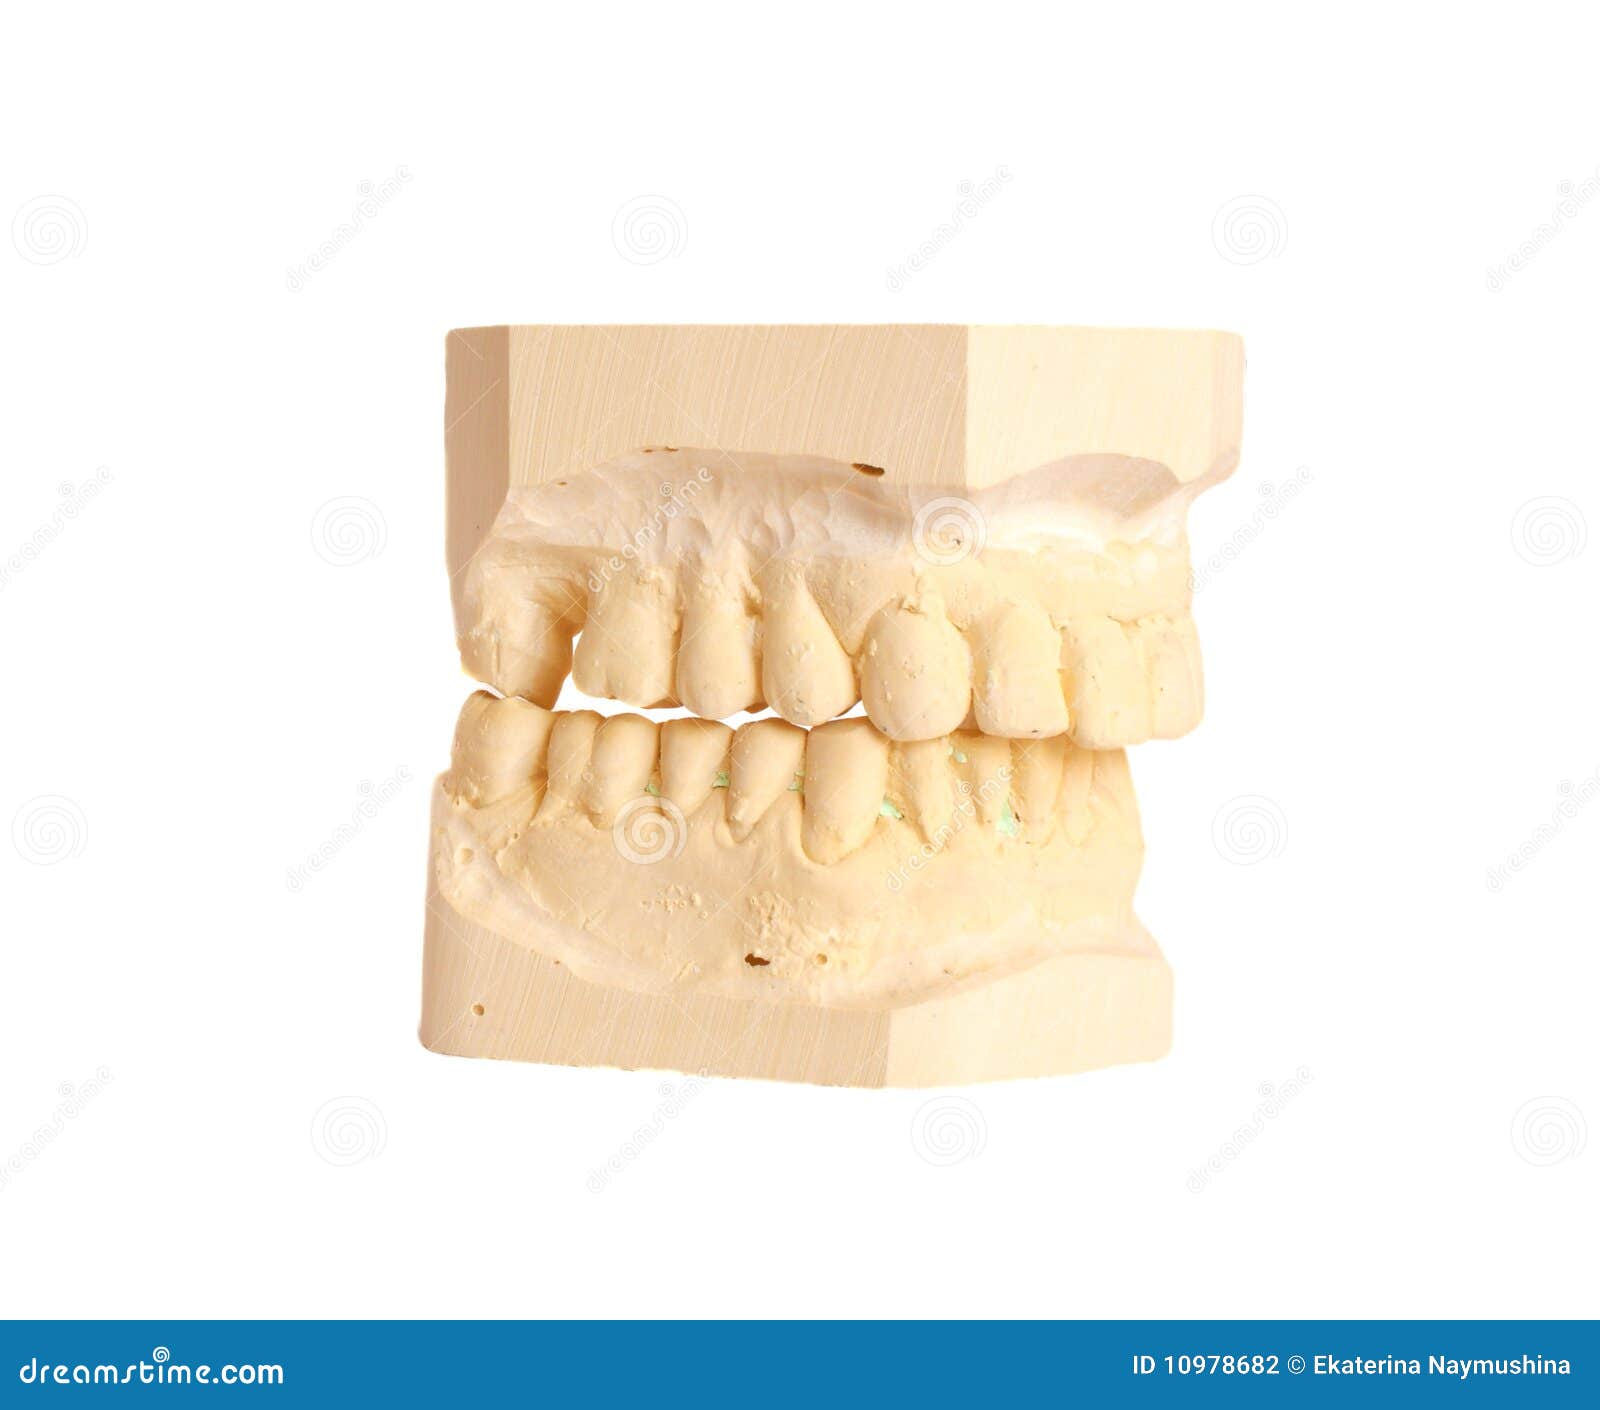 dental impression 4